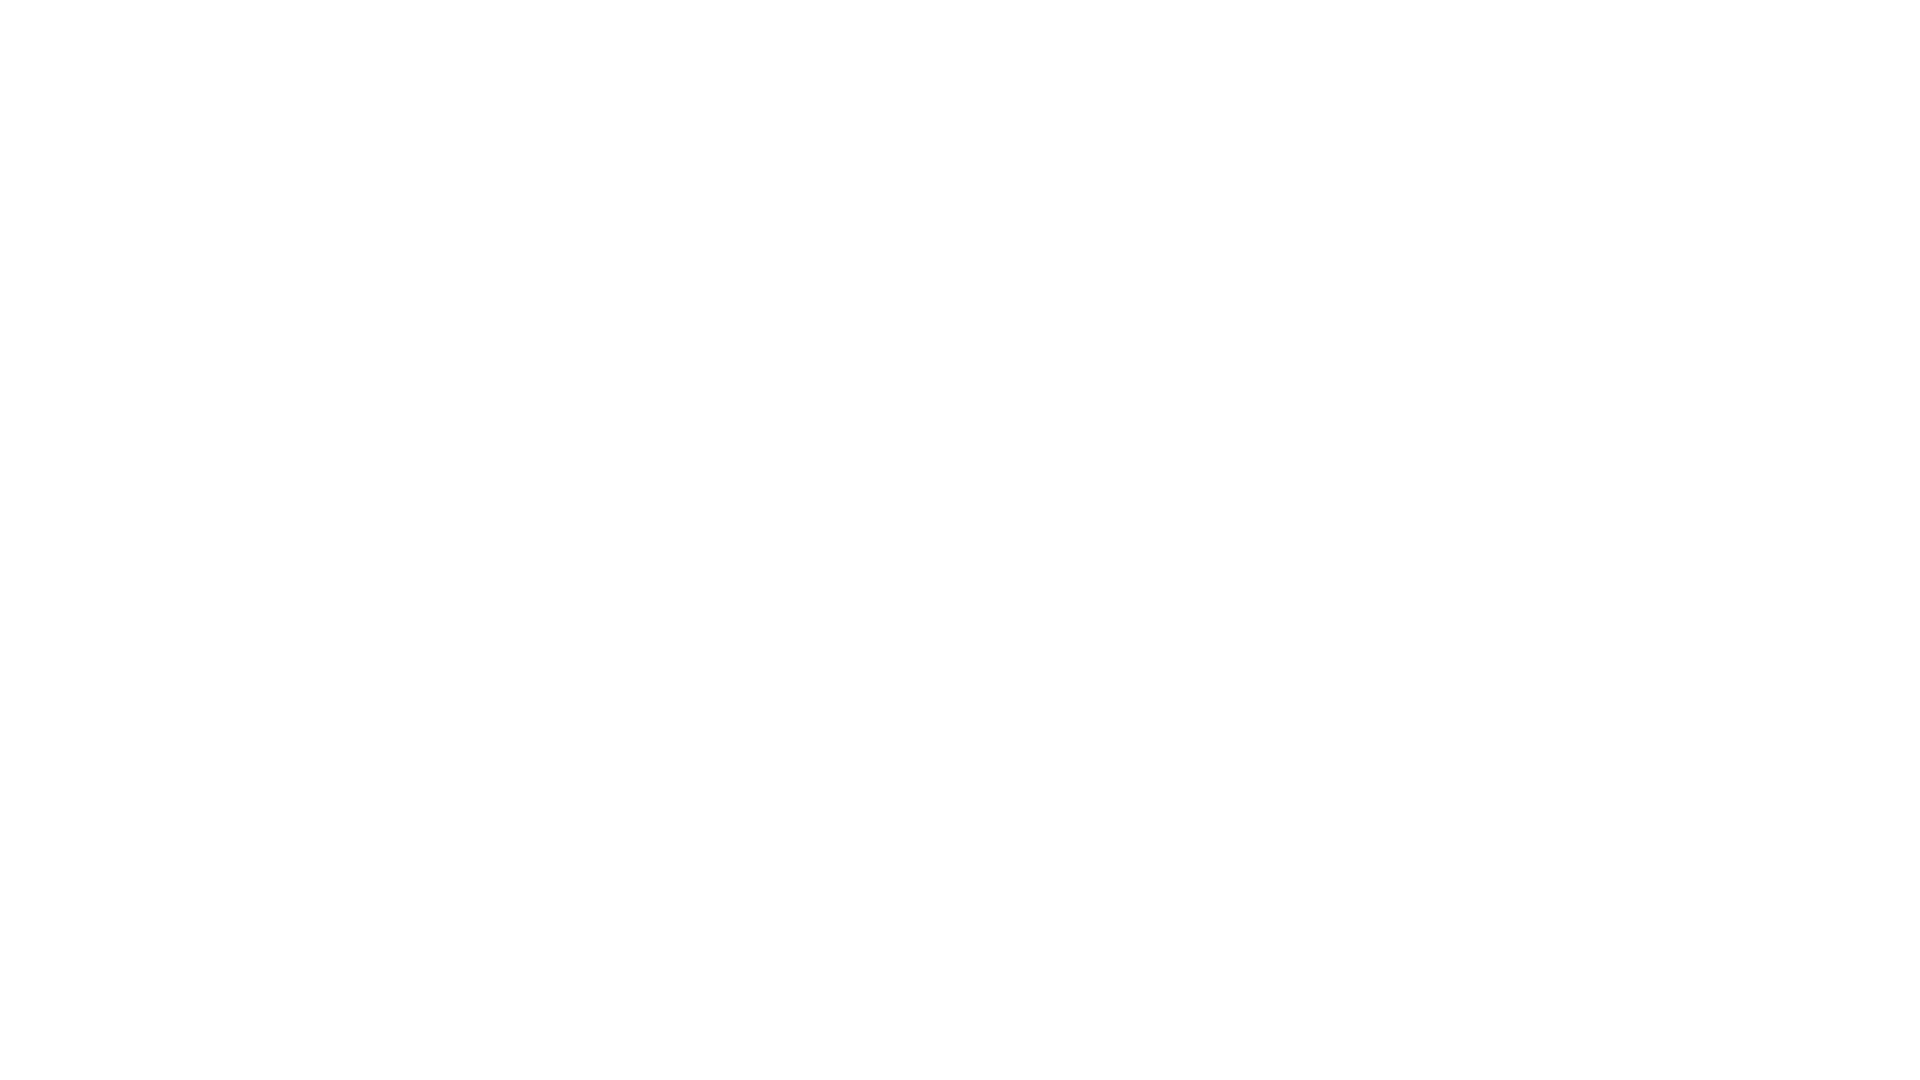 Arch 360